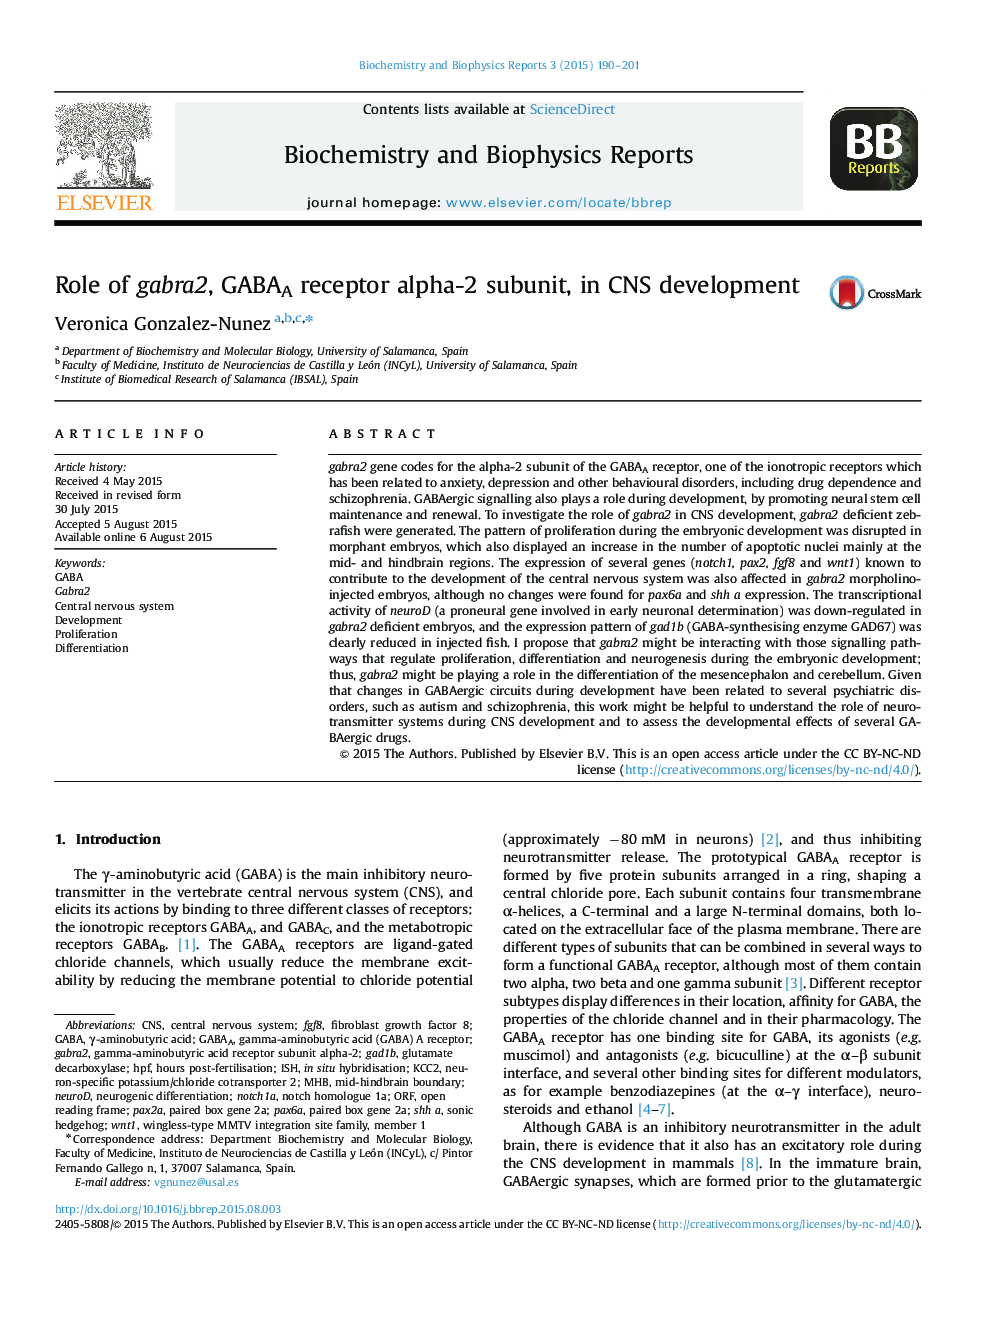 Role of gabra2, GABAA receptor alpha-2 subunit, in CNS development